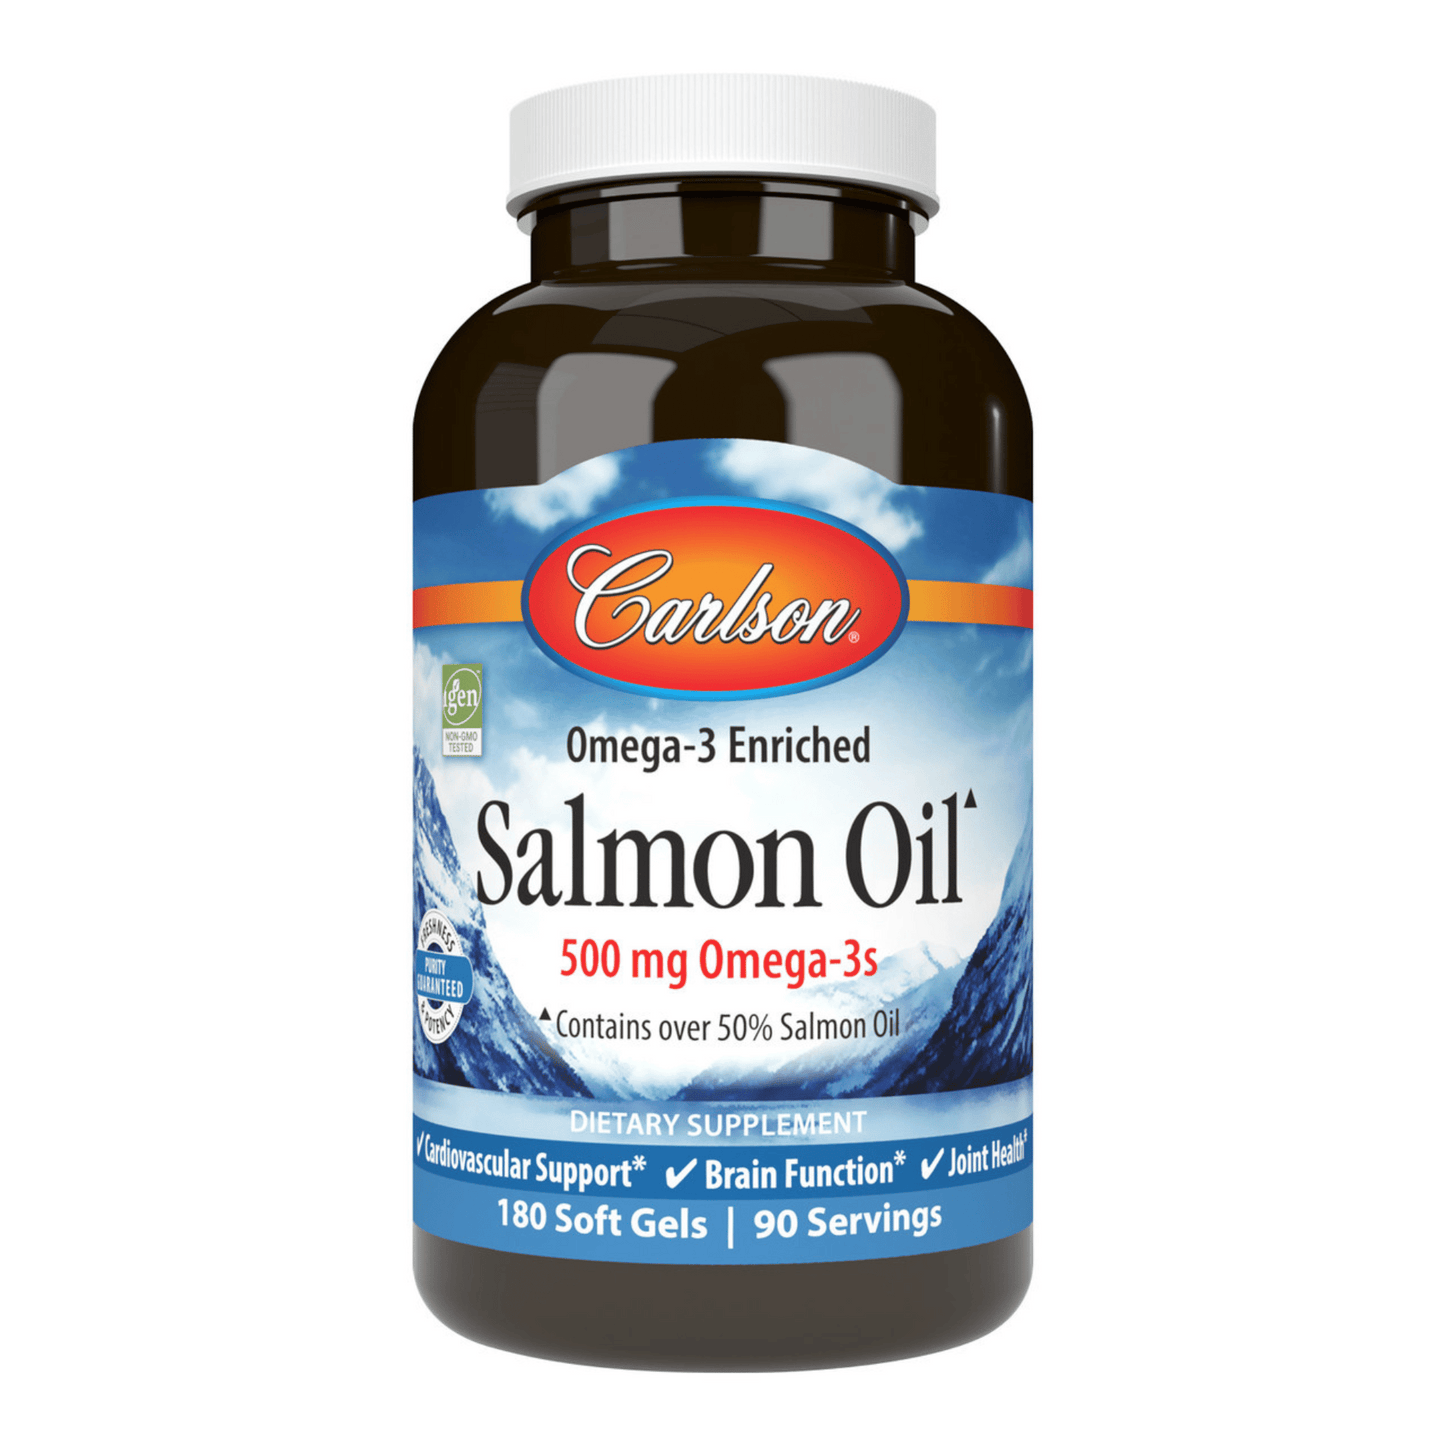 Primary Image of Salmon Oil